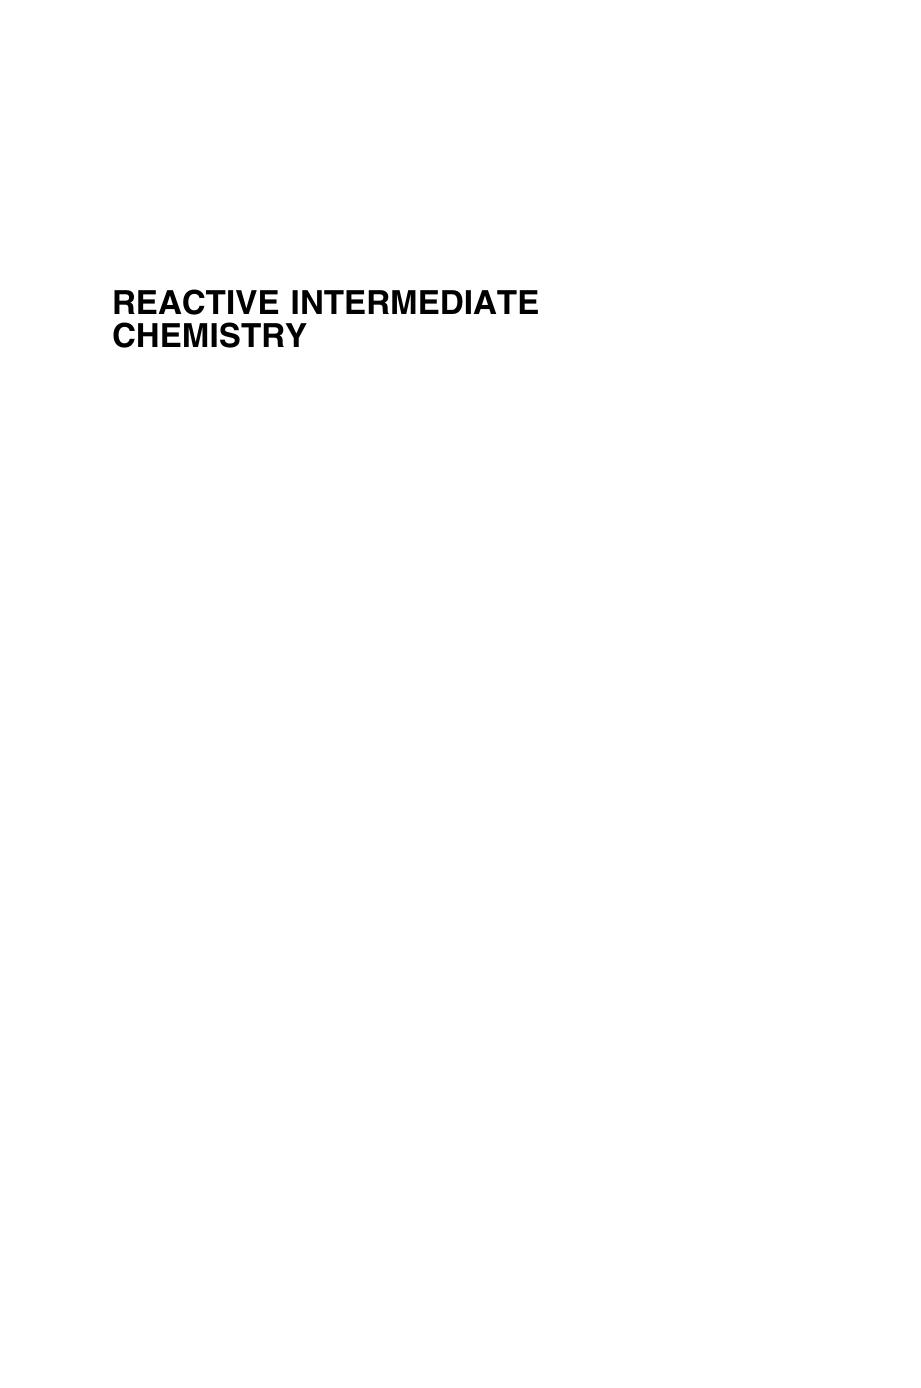 Reactive Intermediate Chemistry 2004